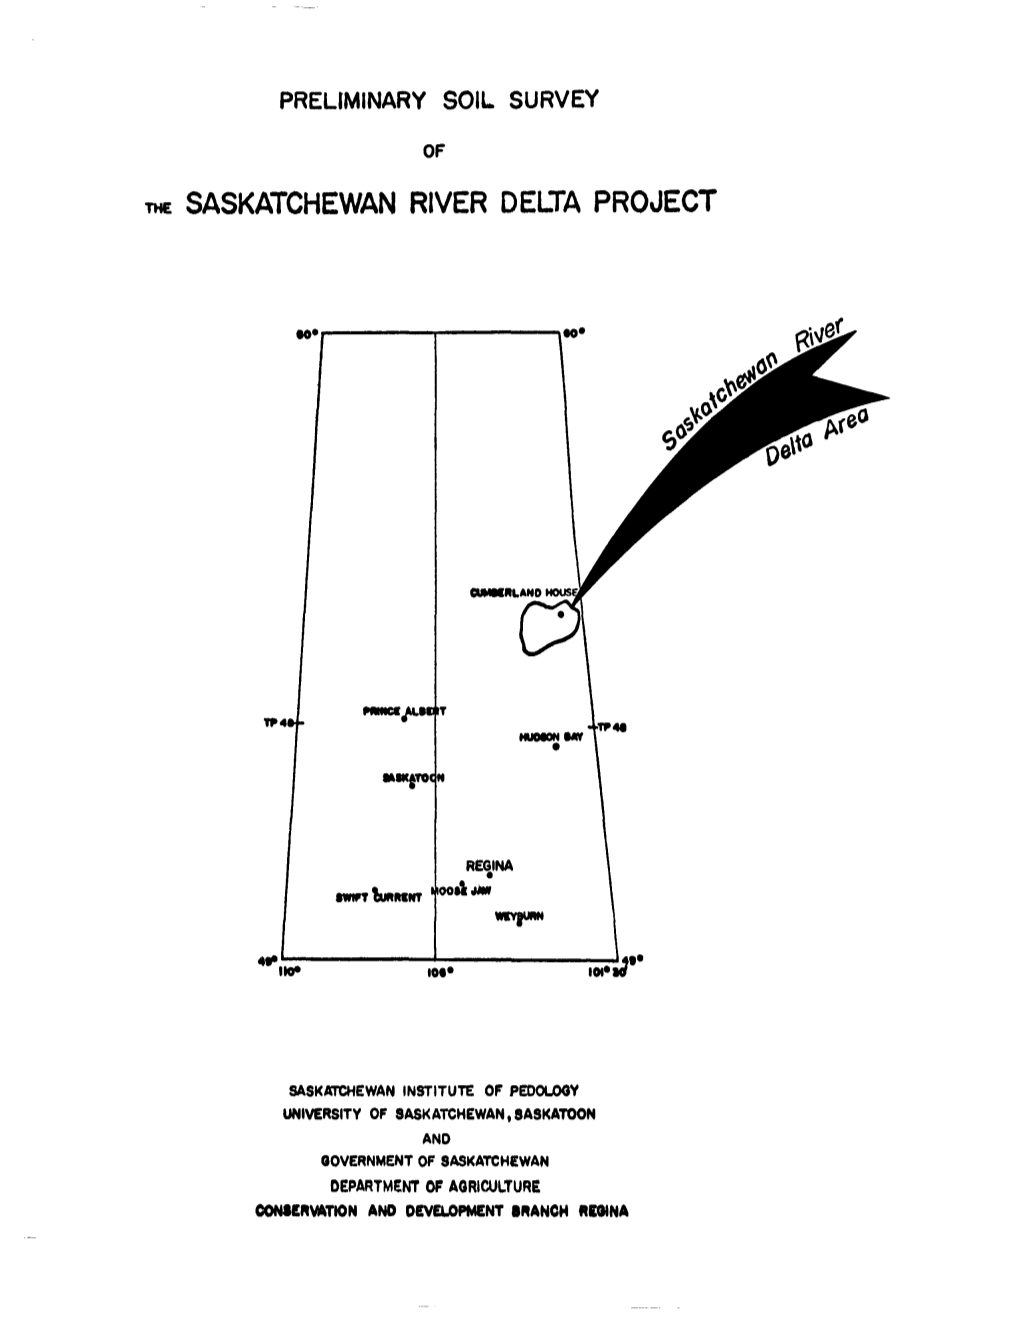 The Saskatchewan River Delta Project